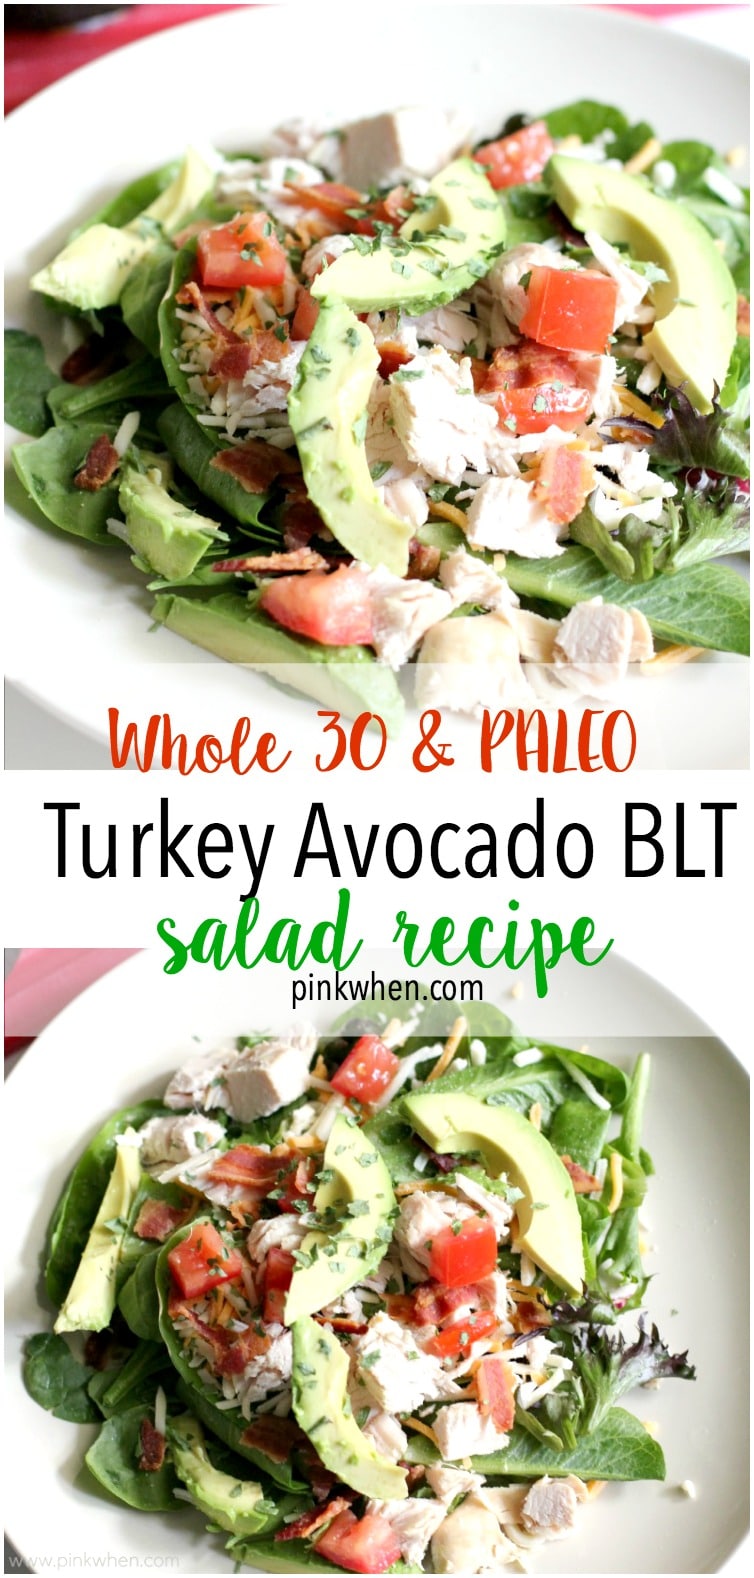 A Whole 30 and Paleo Protein Packed Turkey Avocado BLT Salad recipe.